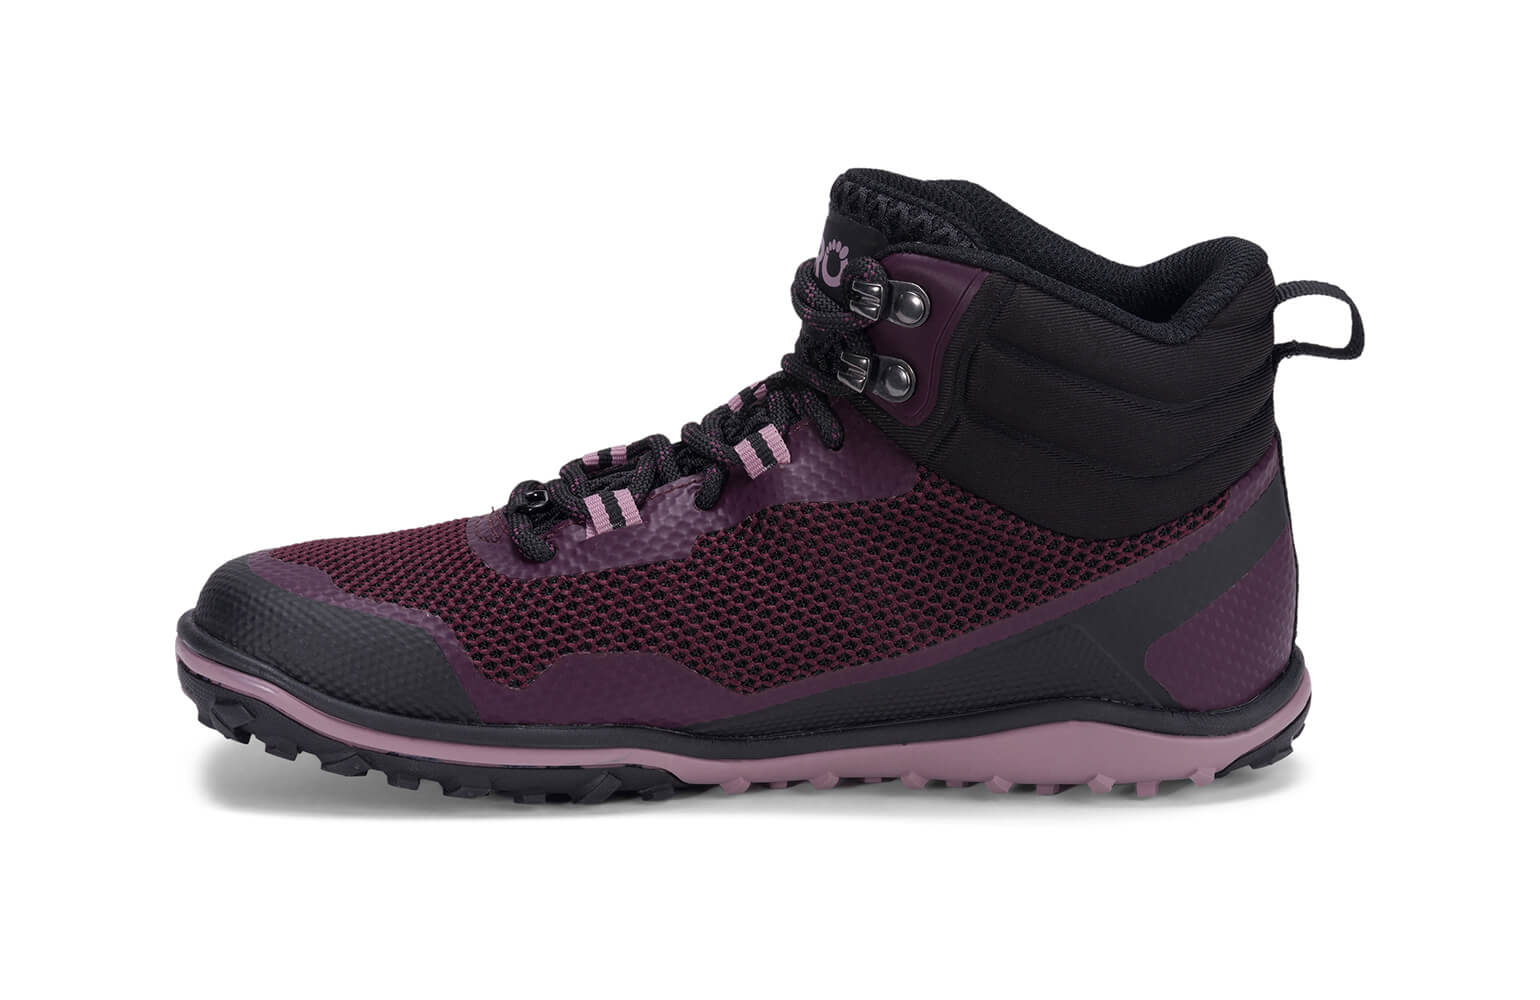 Scrambler Mid - Ultra-Light Hiking Boot for Women from Xero Shoes